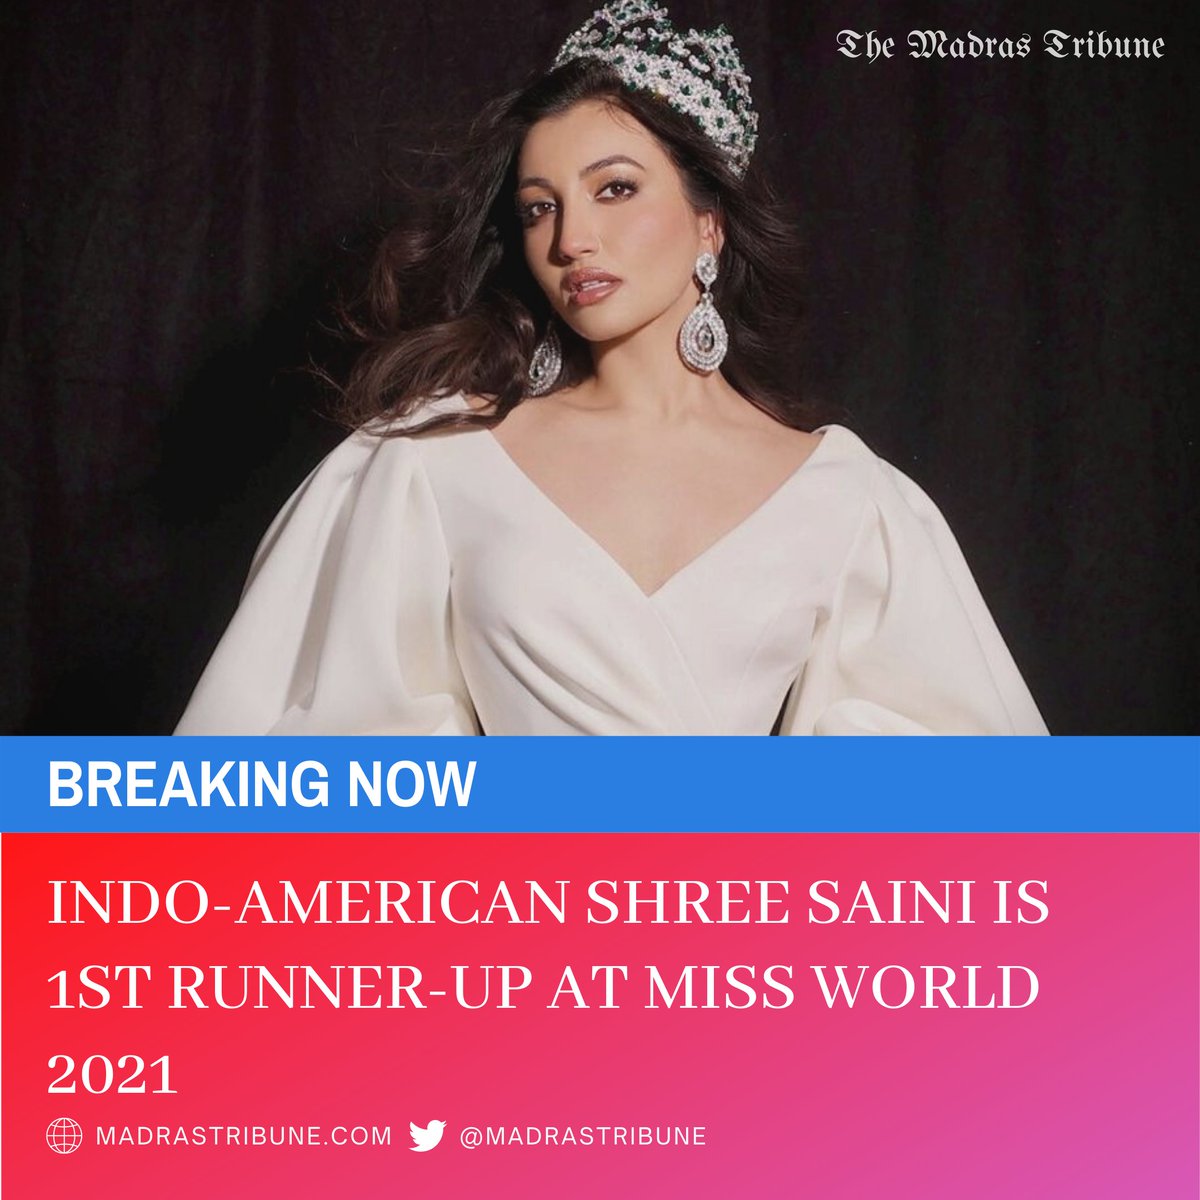 Indo-American Shree Saini is 1st runner-up at Miss World 2021
#ShreeSaini #MissWorld2021 #MadrasTribune
madrastribune.com/2022/03/18/ind…